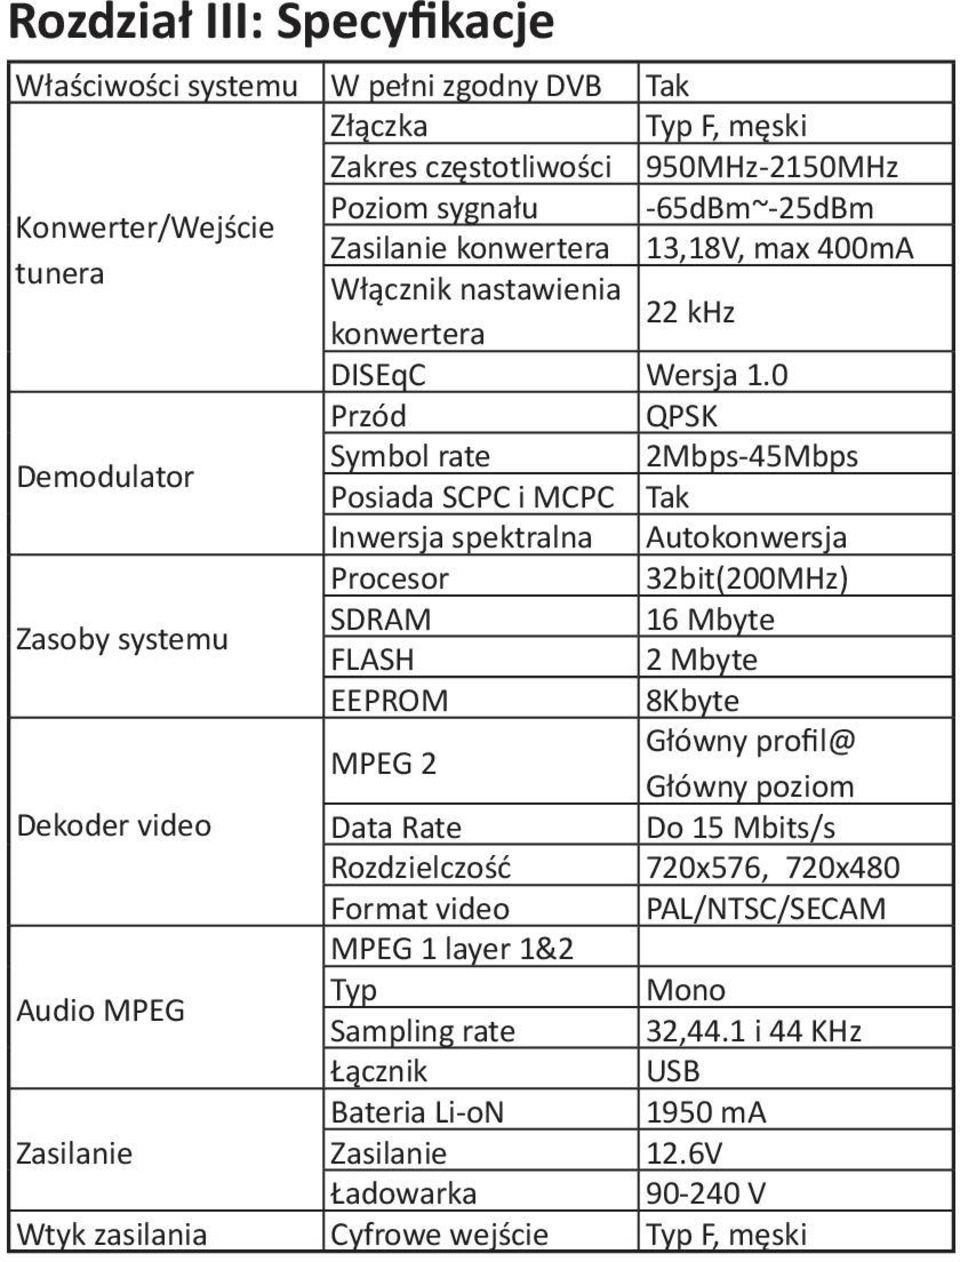 0 Przód QPSK Demodulator Symbol rate 2Mbps-45Mbps Posiada SCPC i MCPC Tak Inwersja spektralna Autokonwersja Procesor 32bit(200MHz) Zasoby systemu SDRAM 16 Mbyte FLASH 2 Mbyte EEPROM 8Kbyte MPEG 2